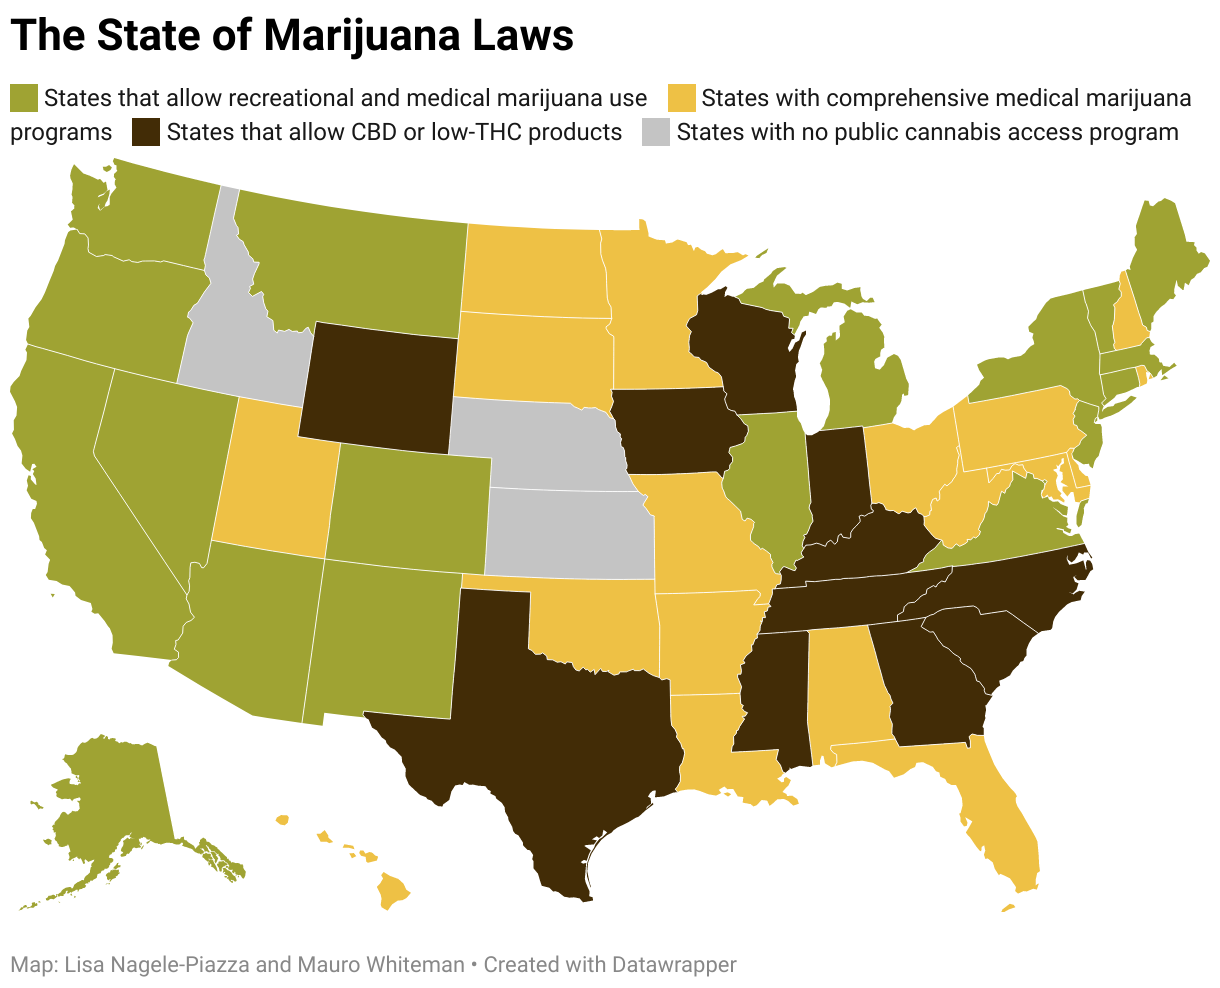 The state of marijuana laws